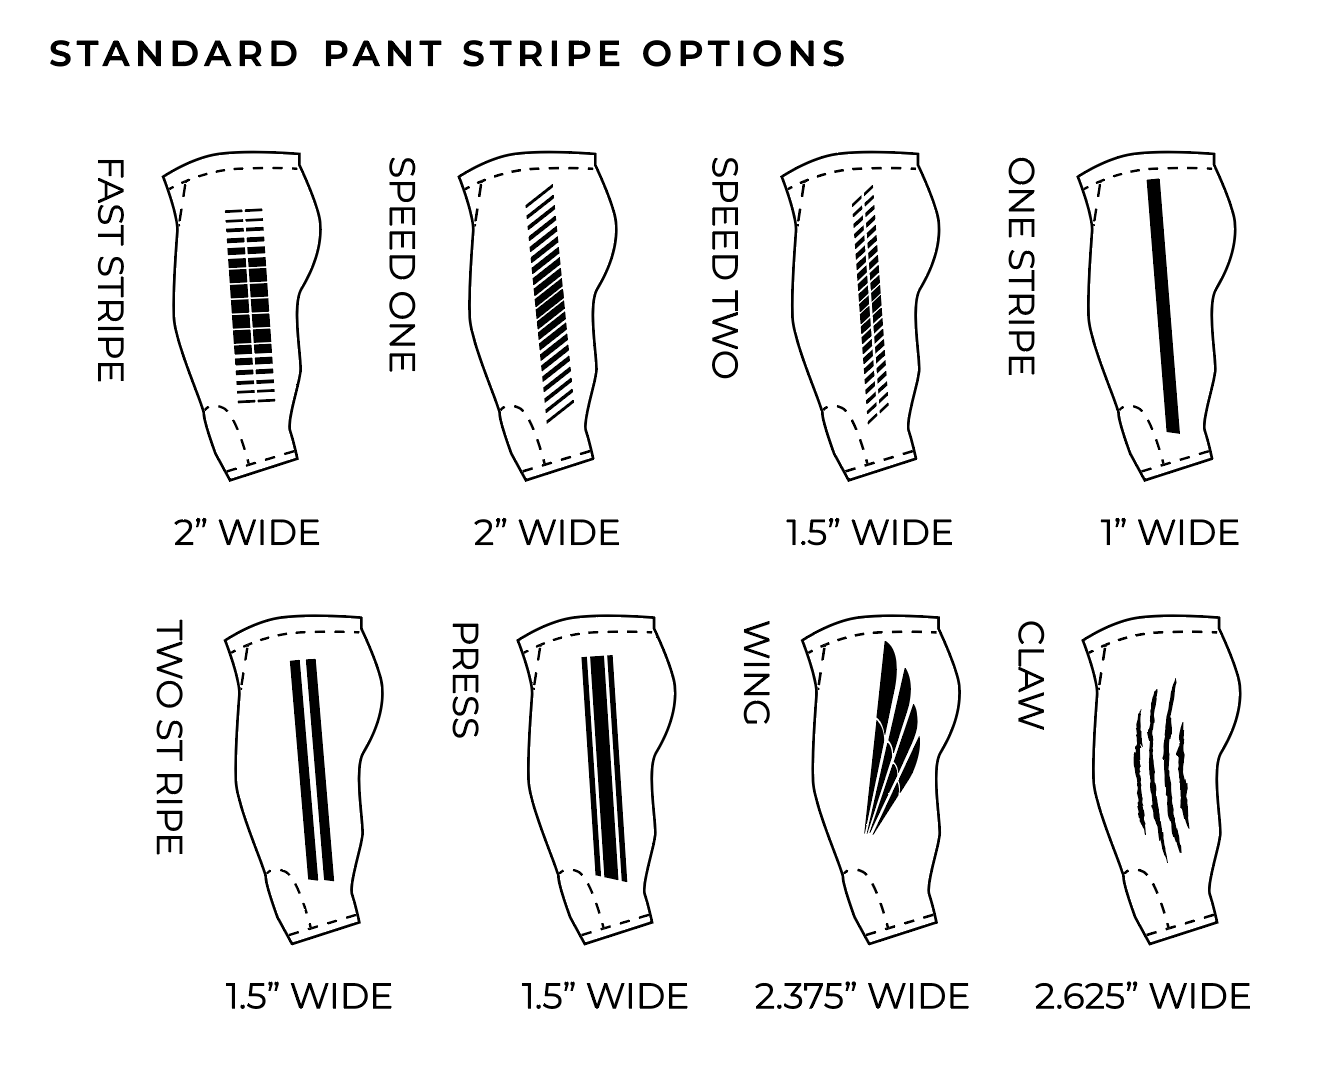 Standard Pant Stripe Options